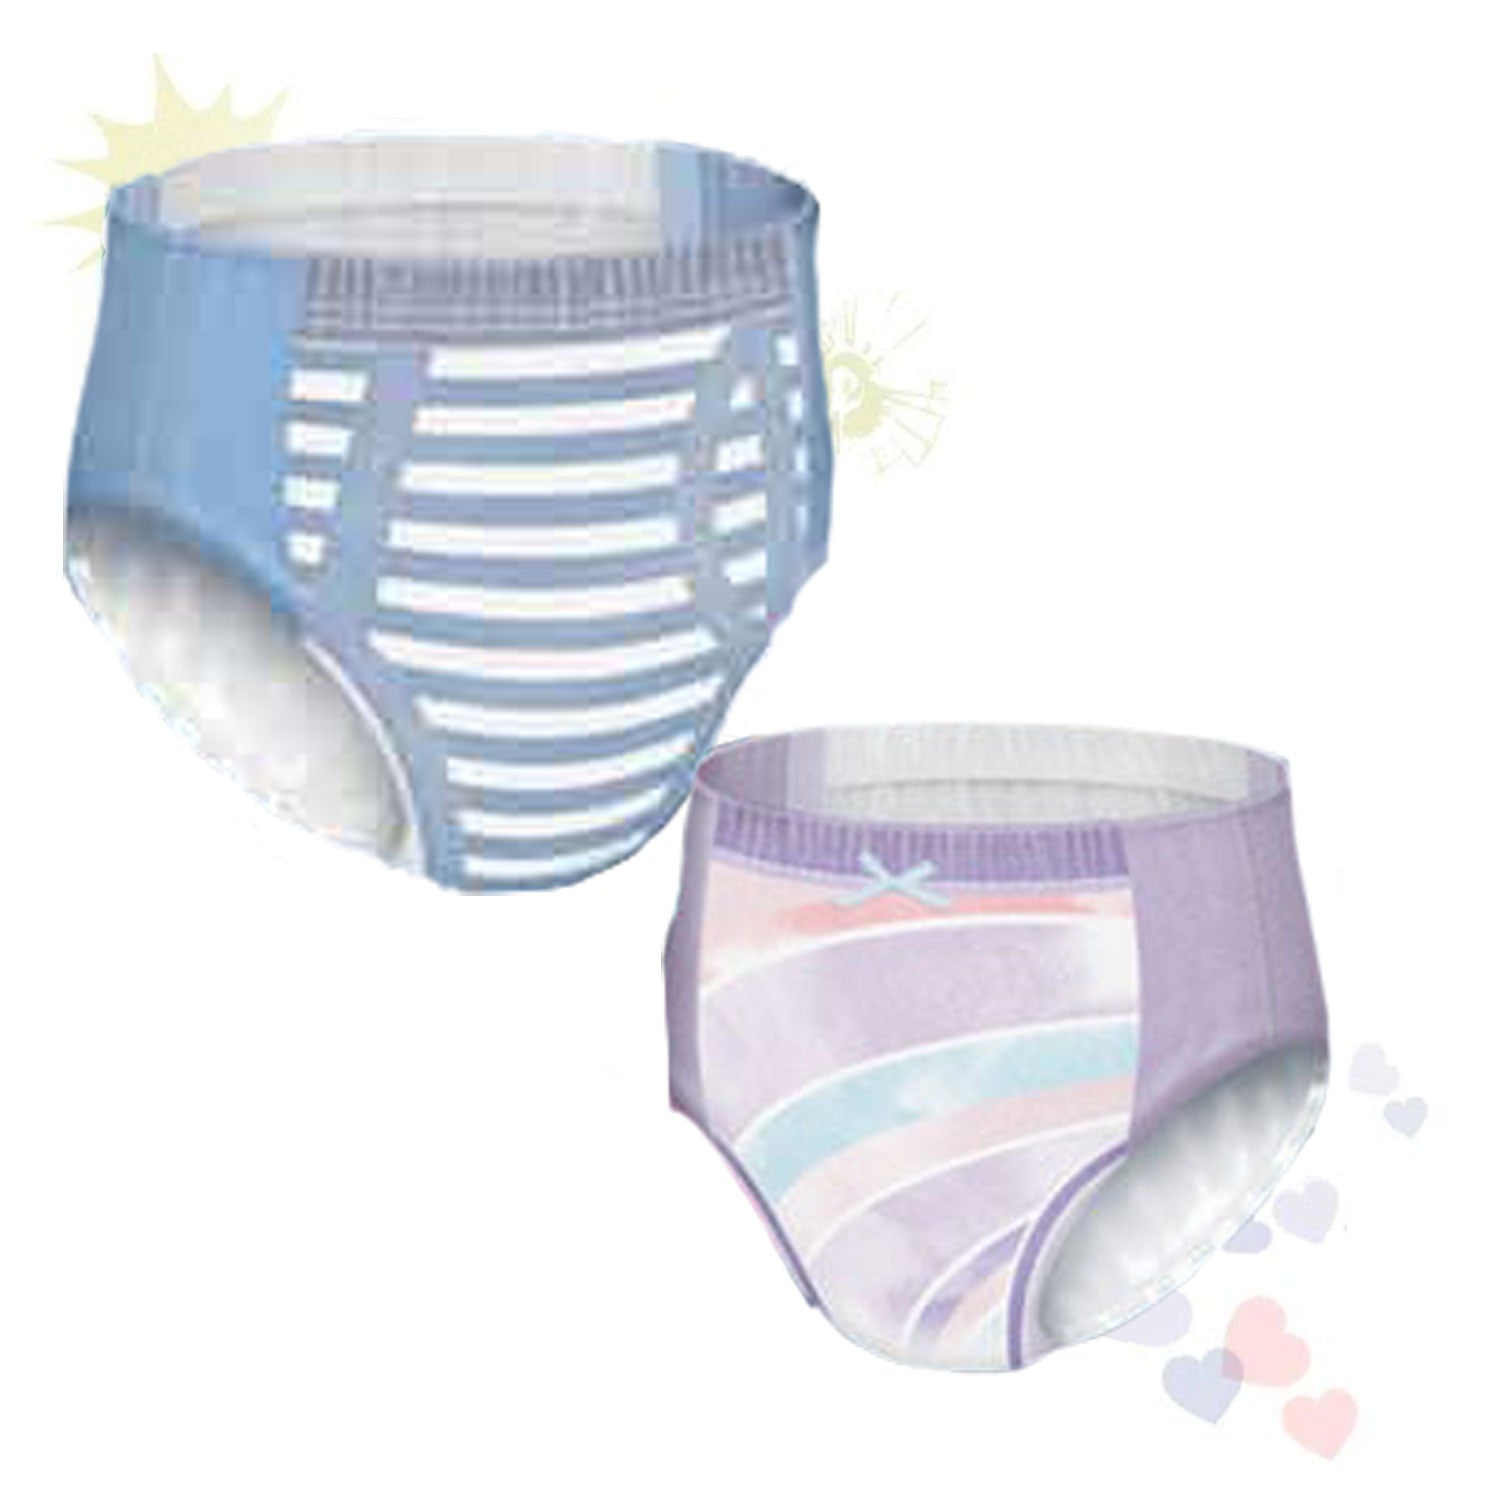  Goodnites Bedwetting Underwear for Girls, Large/X